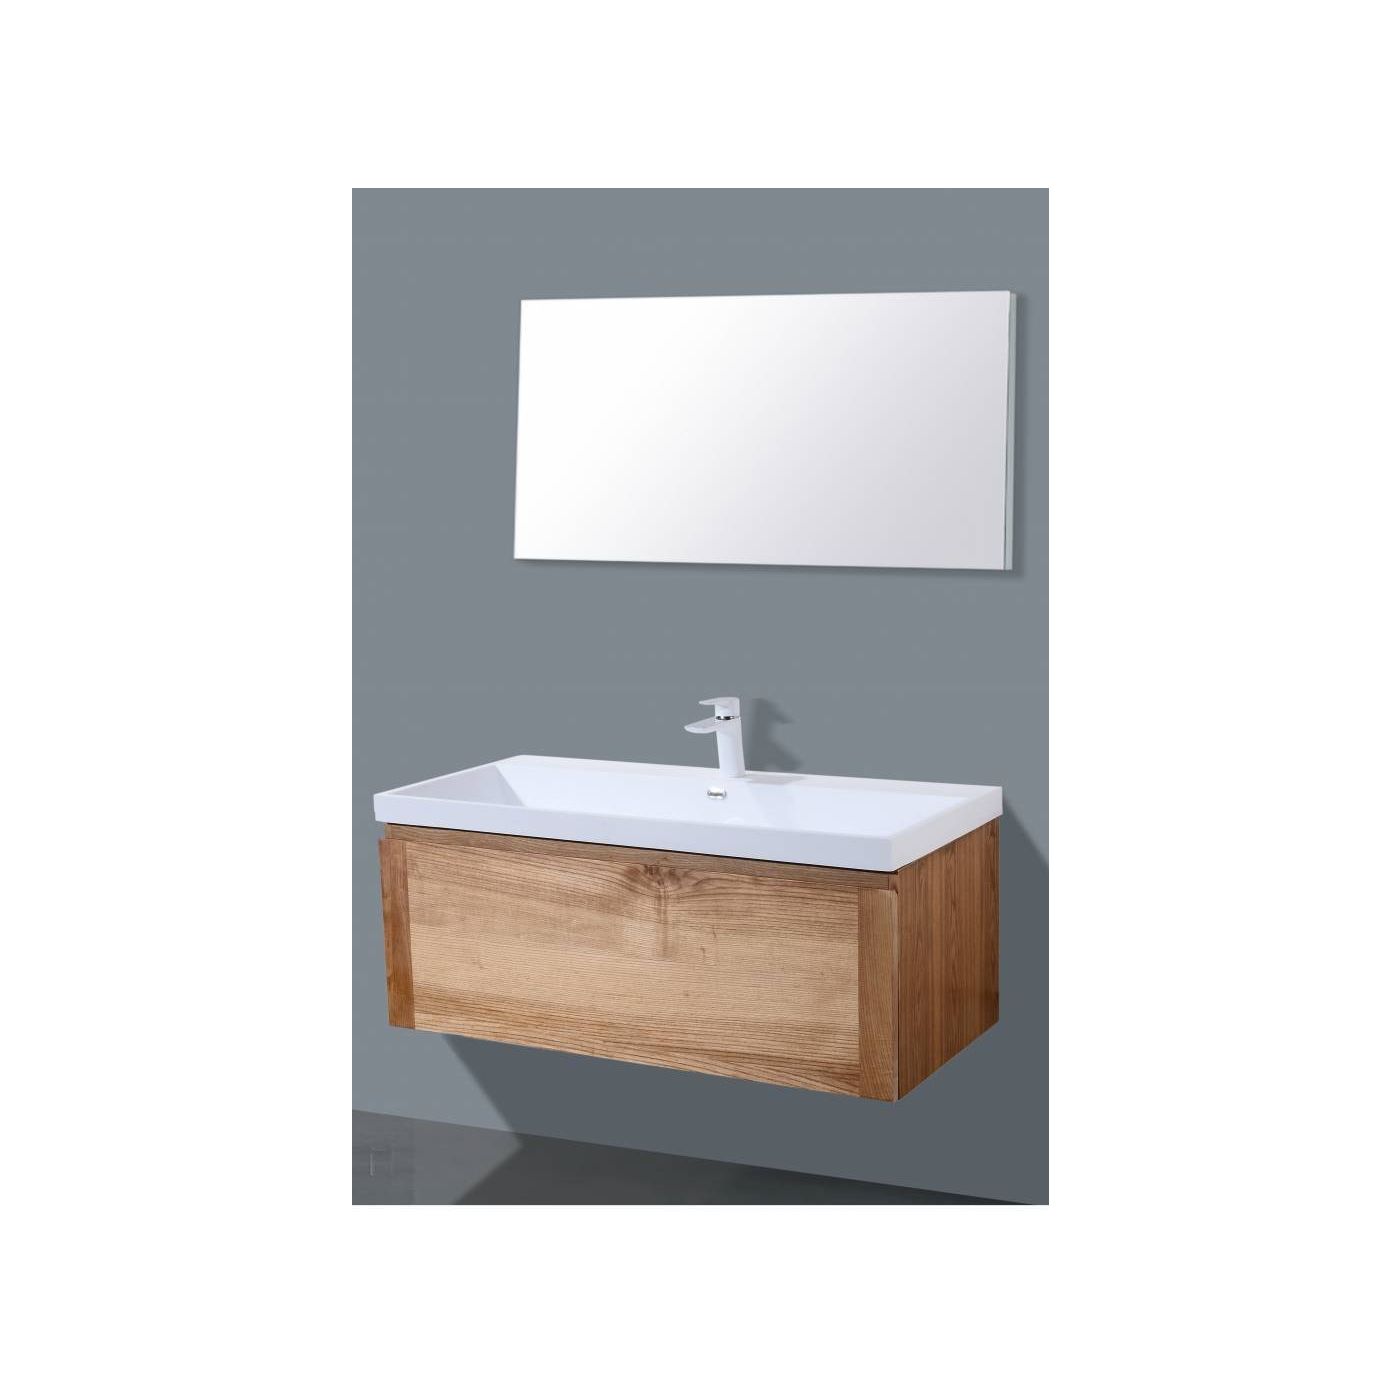 Neuer Vision badkamermeubel met Trendline wastafel zonder kraangat 100 wood eiken